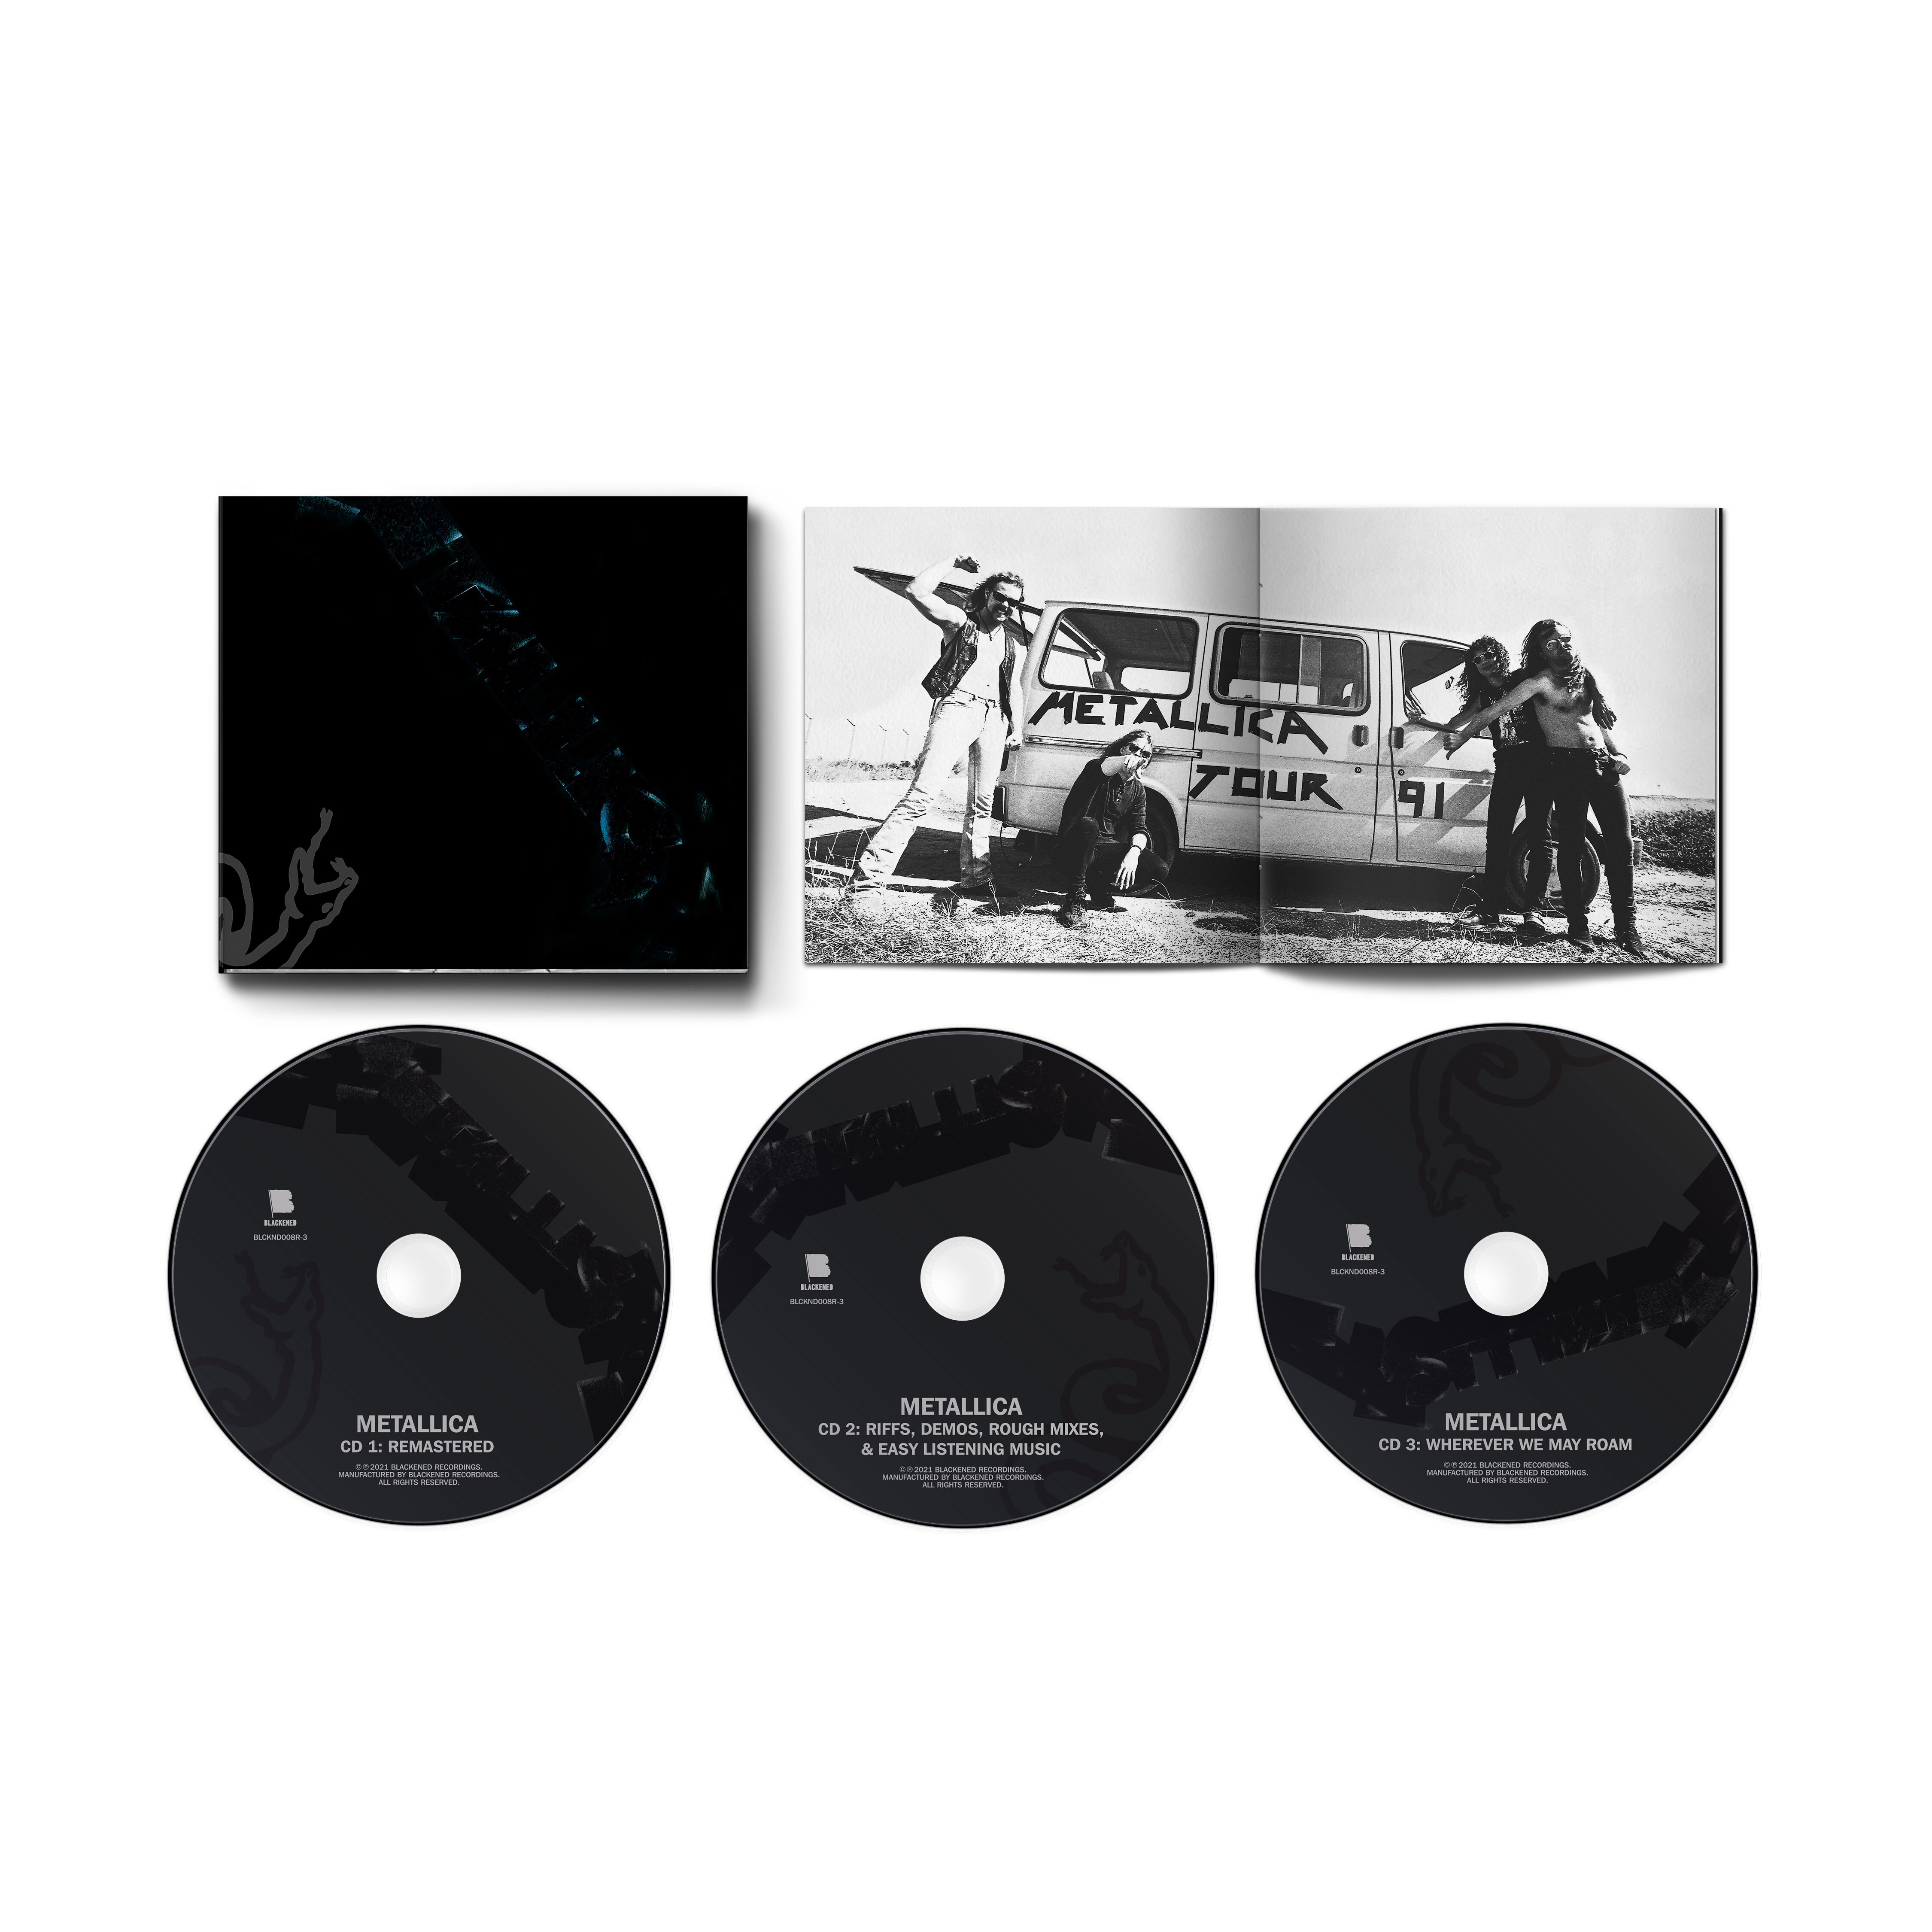 Metallica (The Black Album) Remastered - 3-CD Expanded Edition |  Metallica.com